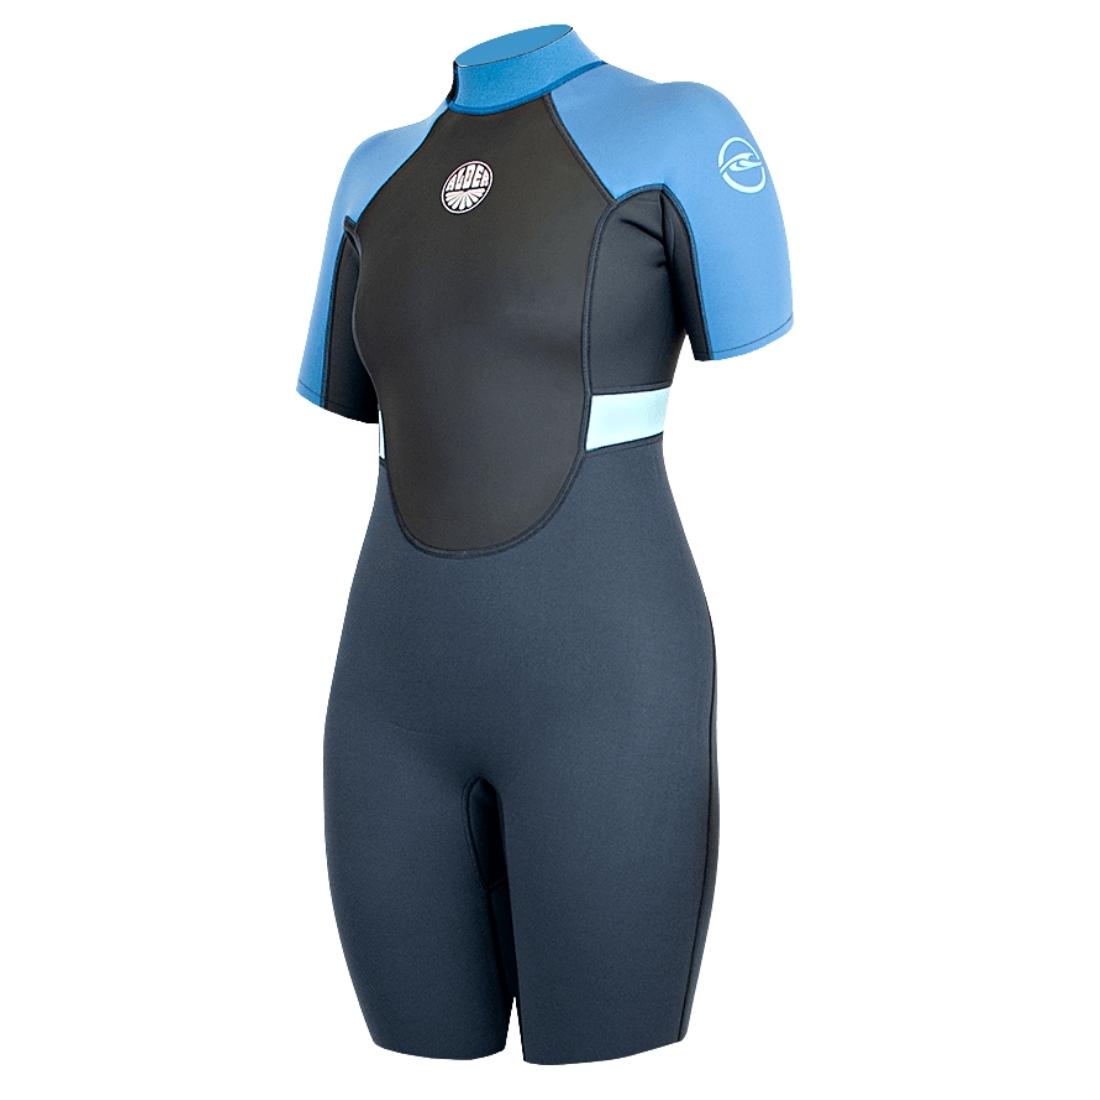 Alder Women's Impact 3/2mm Shortie Wetsuit 2022 - Graphite - Womens Shorty/Spring Wetsuit by Alder